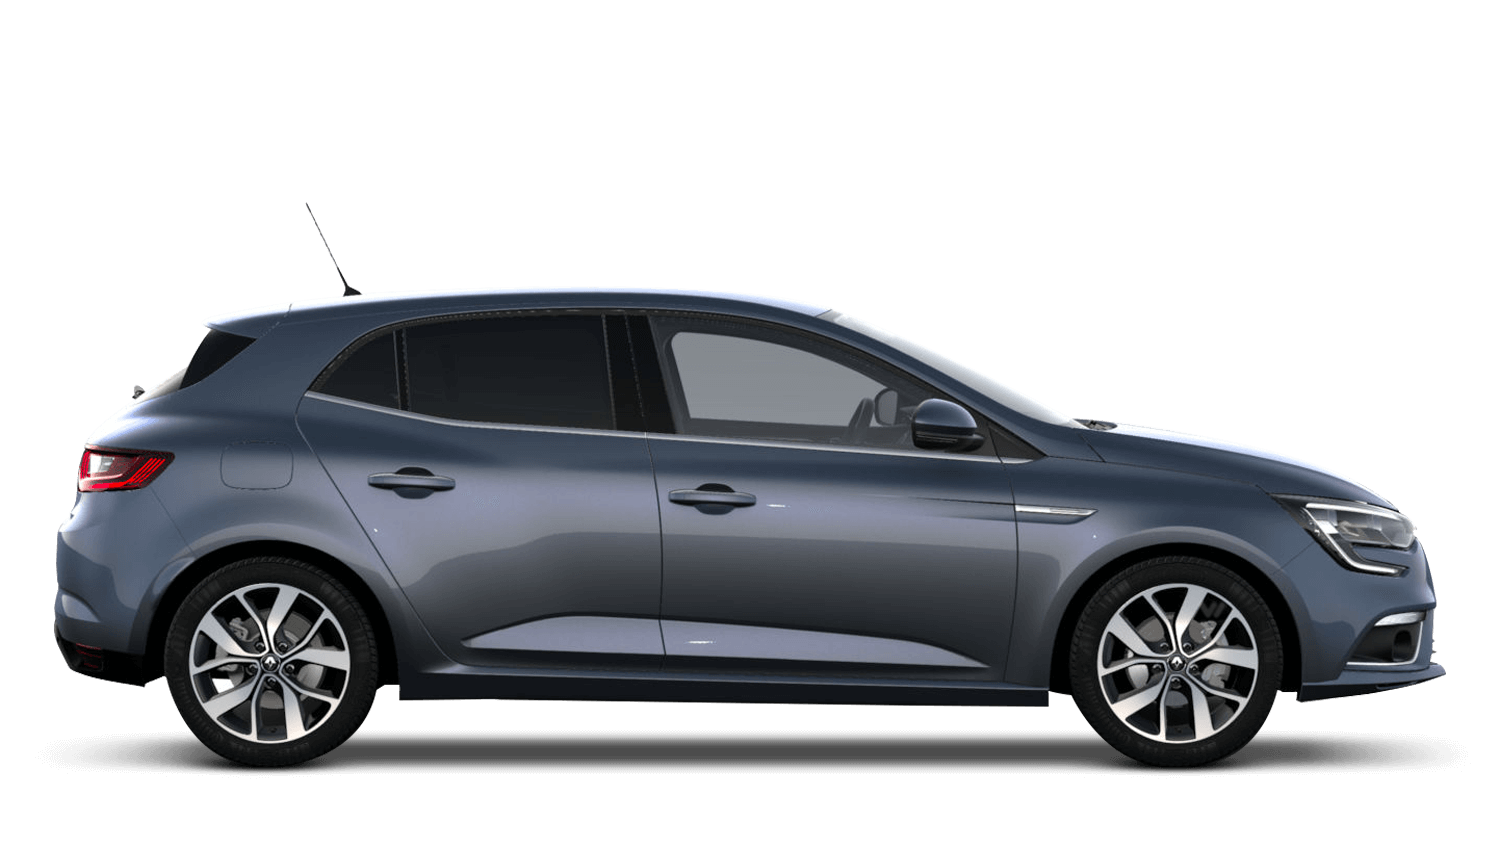 Titanium Grey New Renault MEGANE